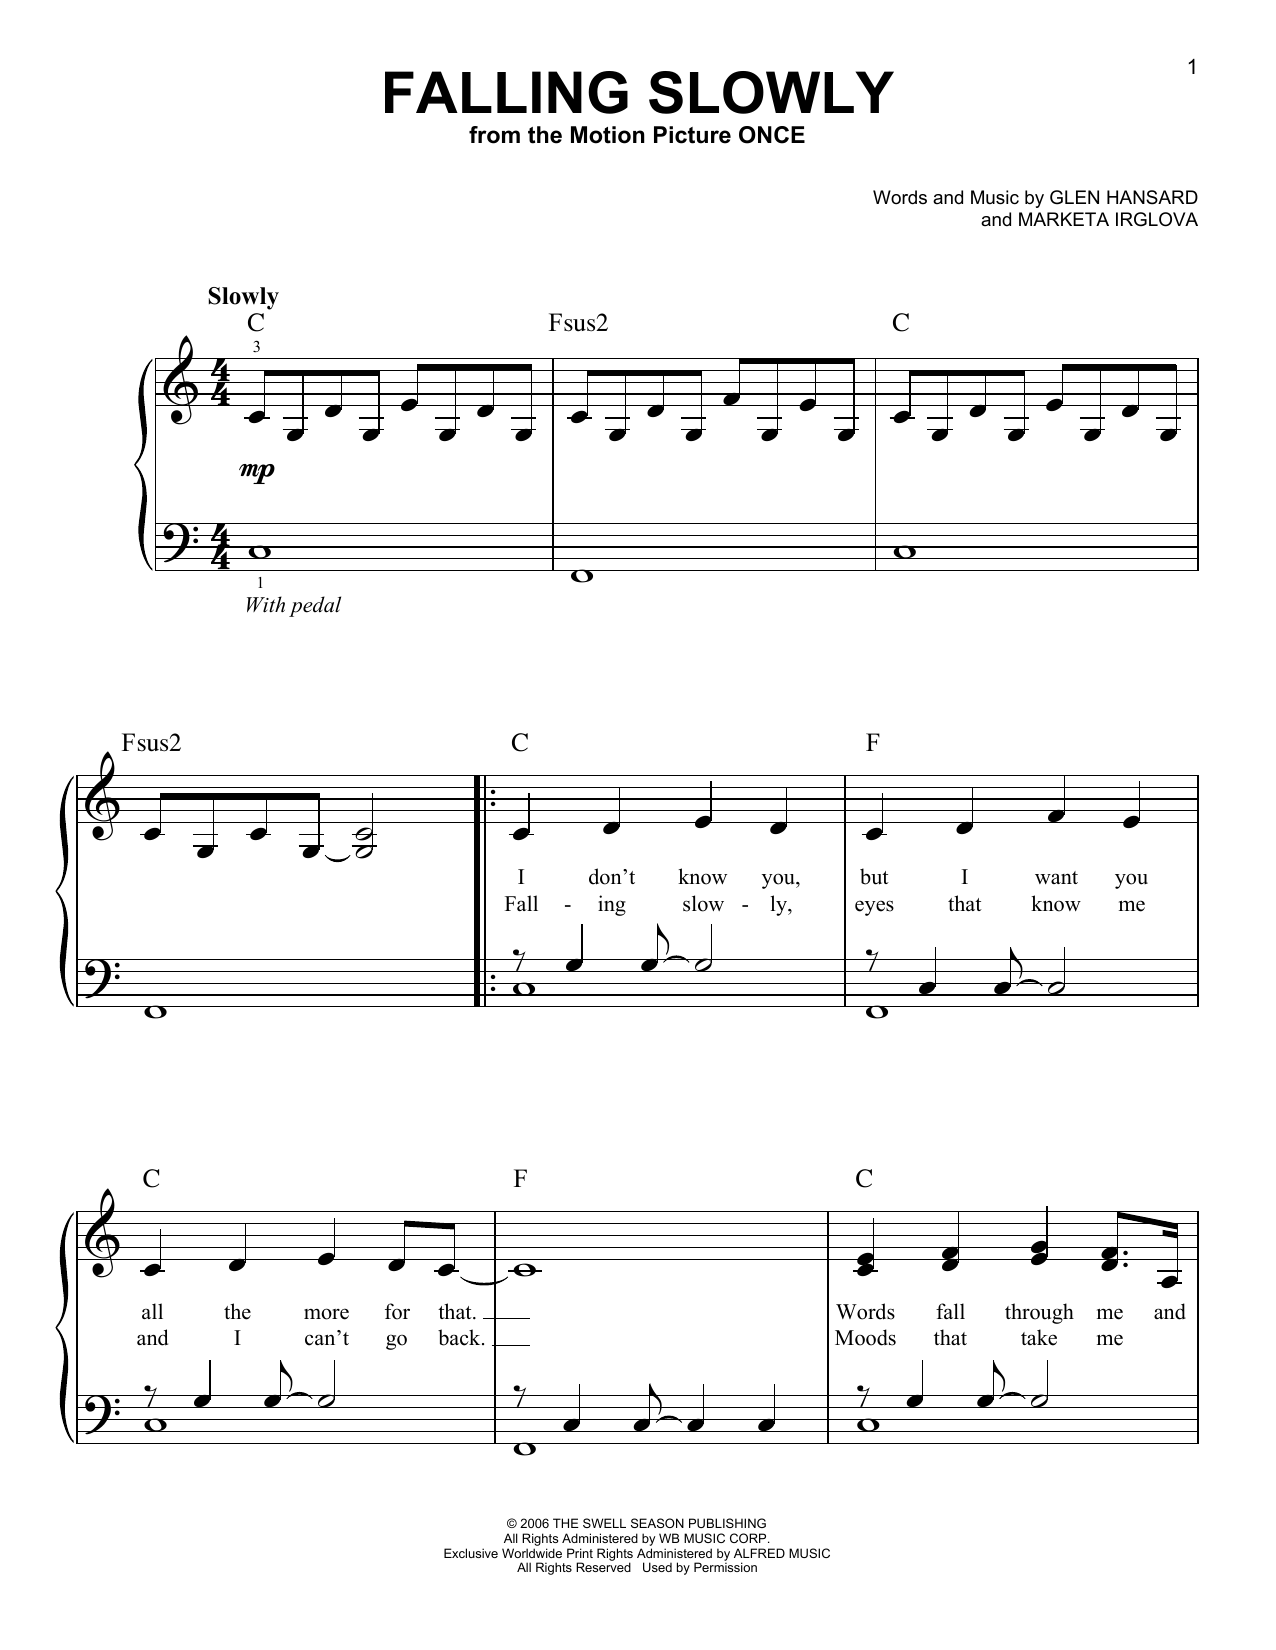 Glen Hansard & Marketa Irglova Falling Slowly (from Once) Sheet Music Notes & Chords for Violin Duet - Download or Print PDF